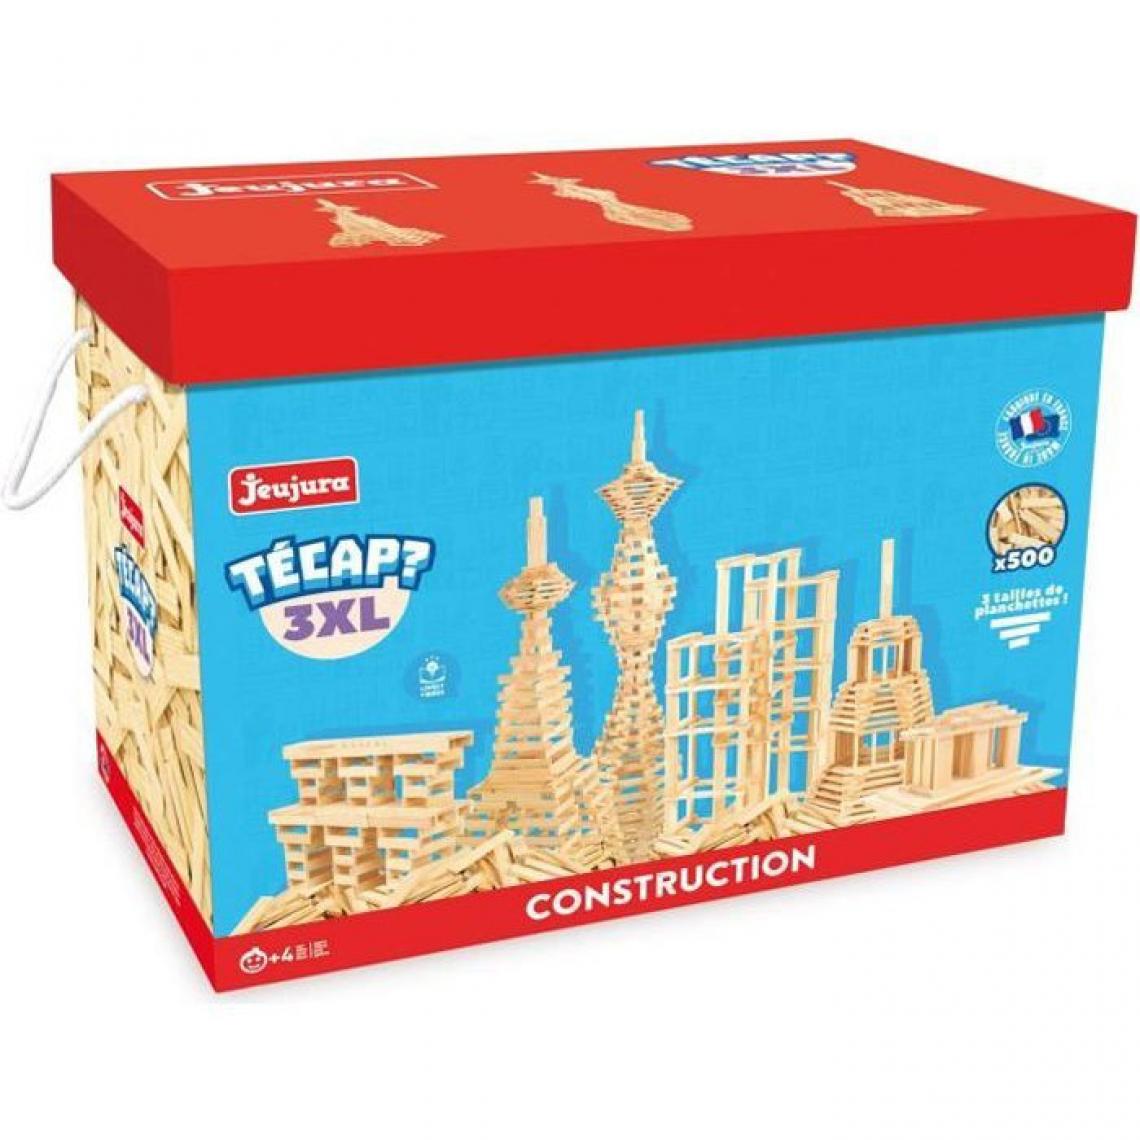 Jeujura - JEUJURA TECAP ? 3XL - 8324 - 500 planchettes en bois - jeu de construction - Briques et blocs